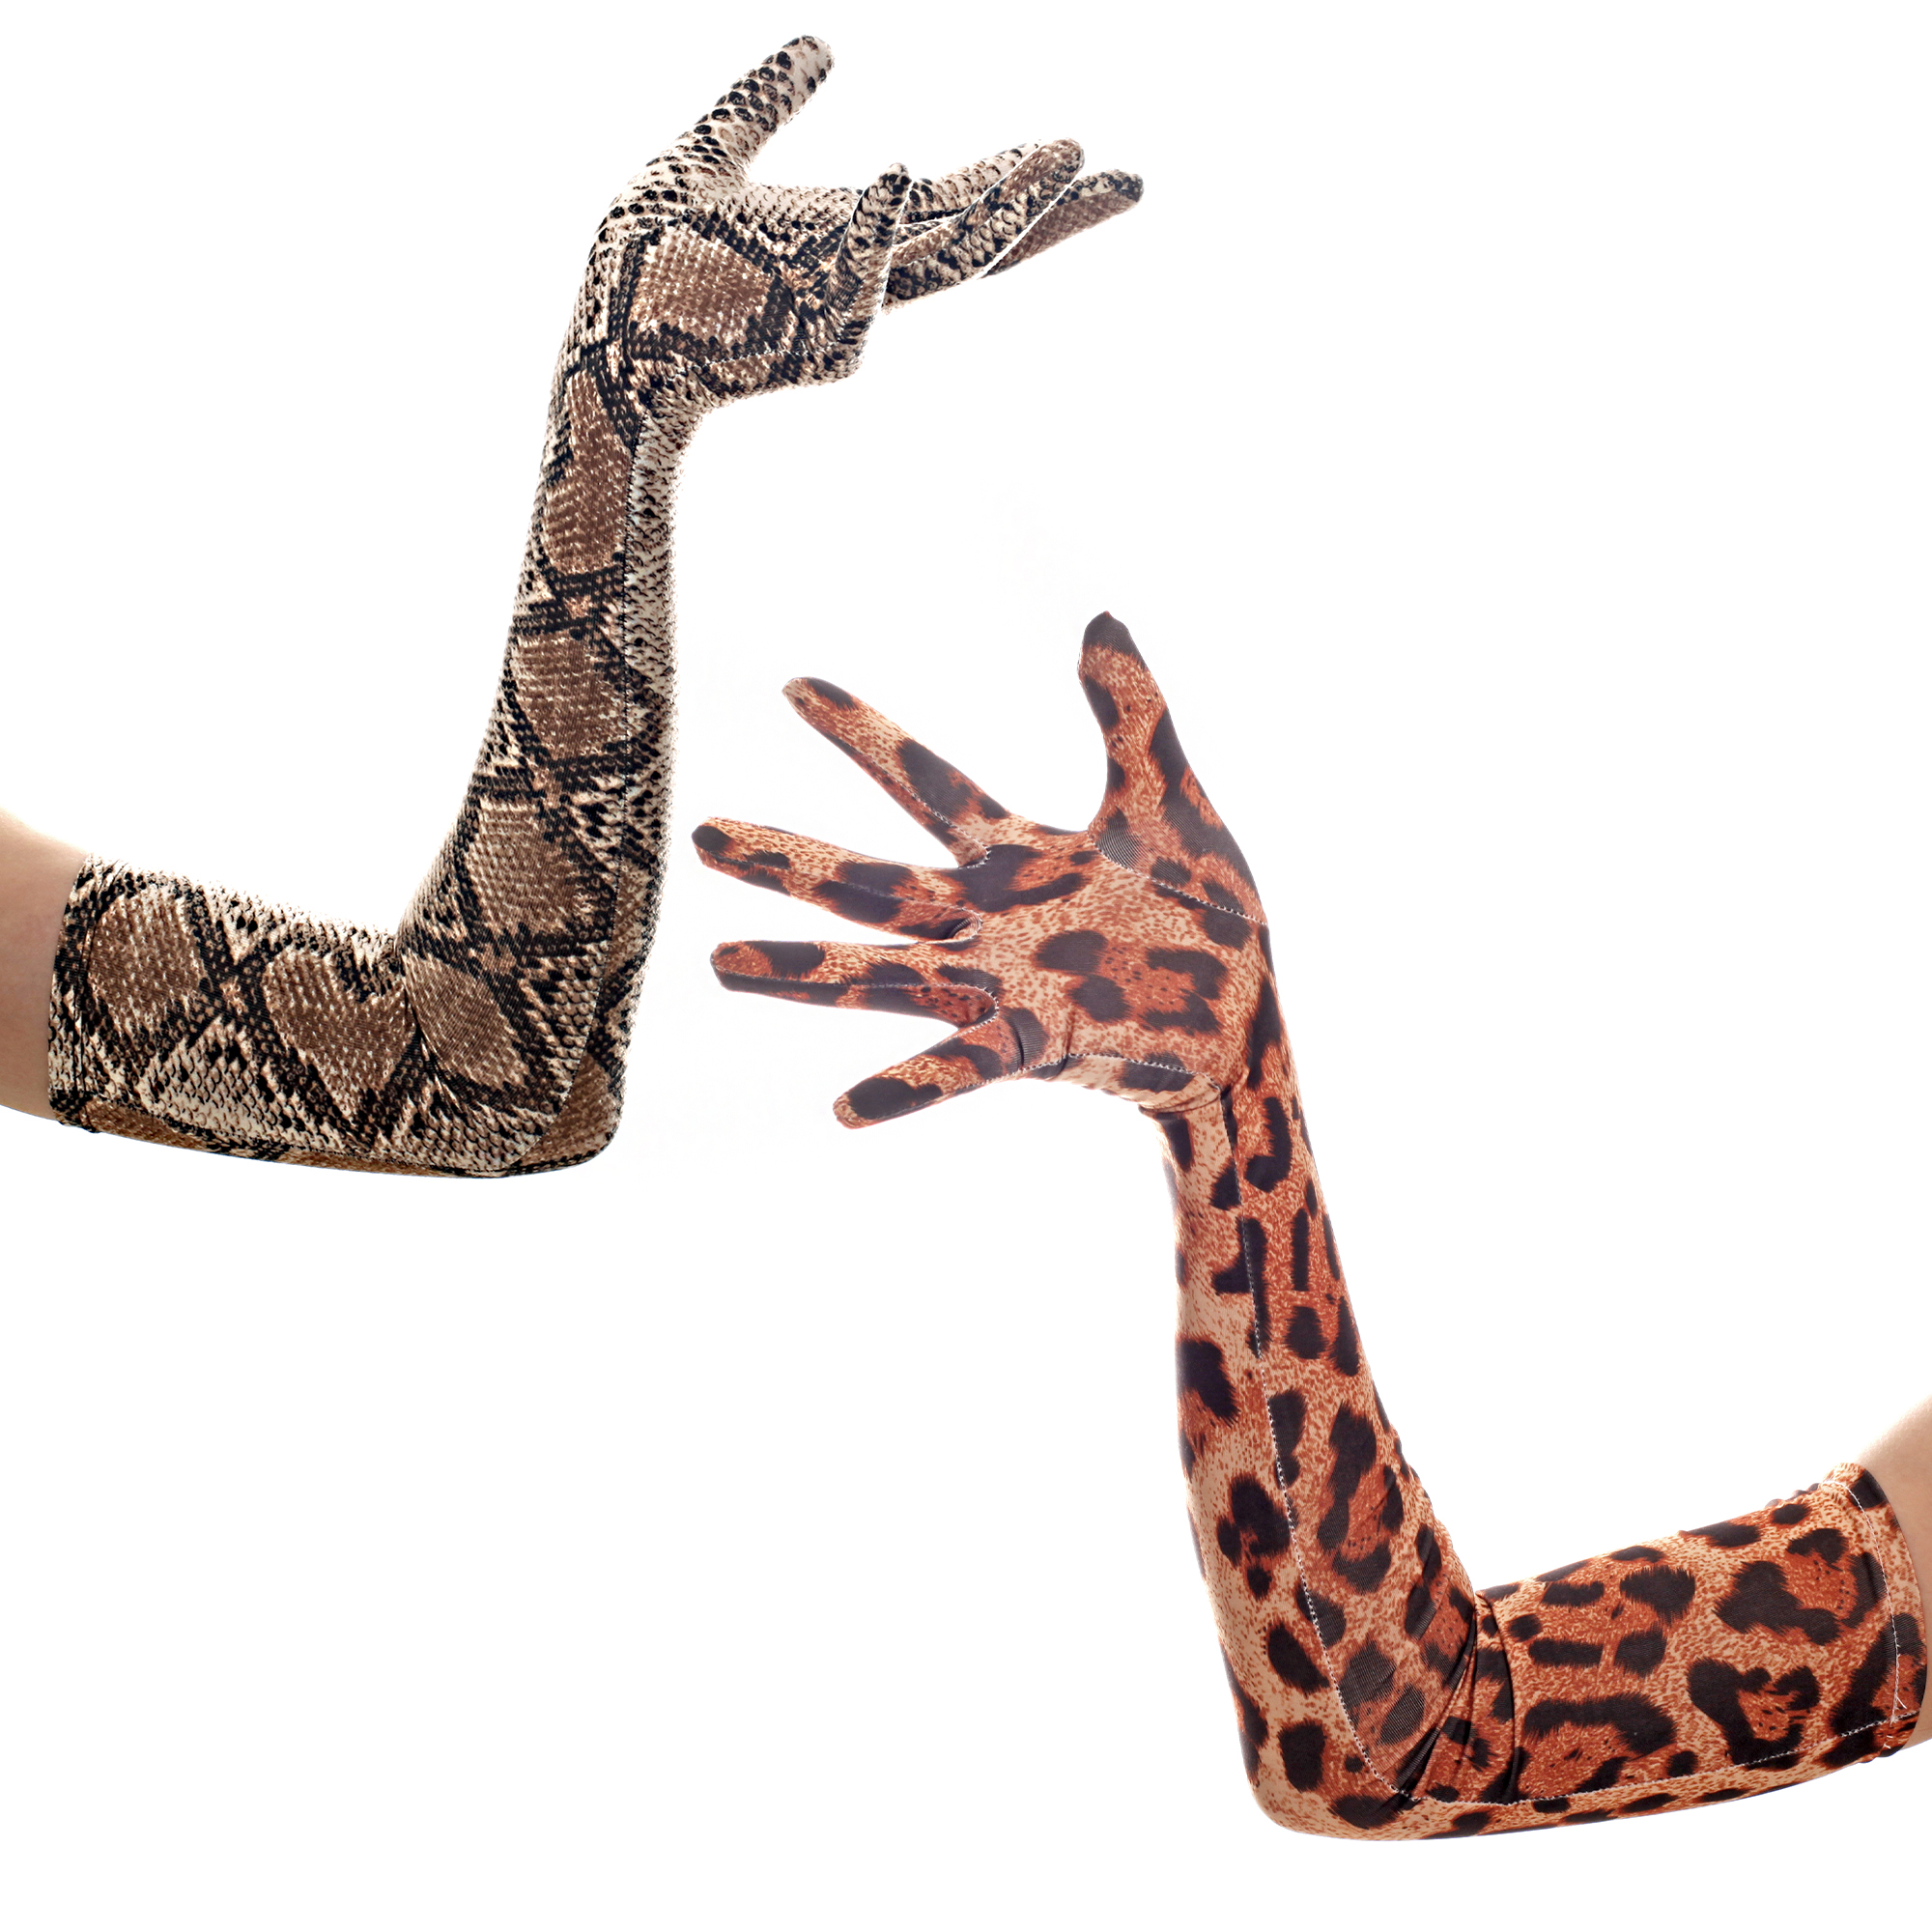 Ftshist 性感超长舞台70厘米 60cm 动物纹豹纹蛇皮纹过肘情趣手套